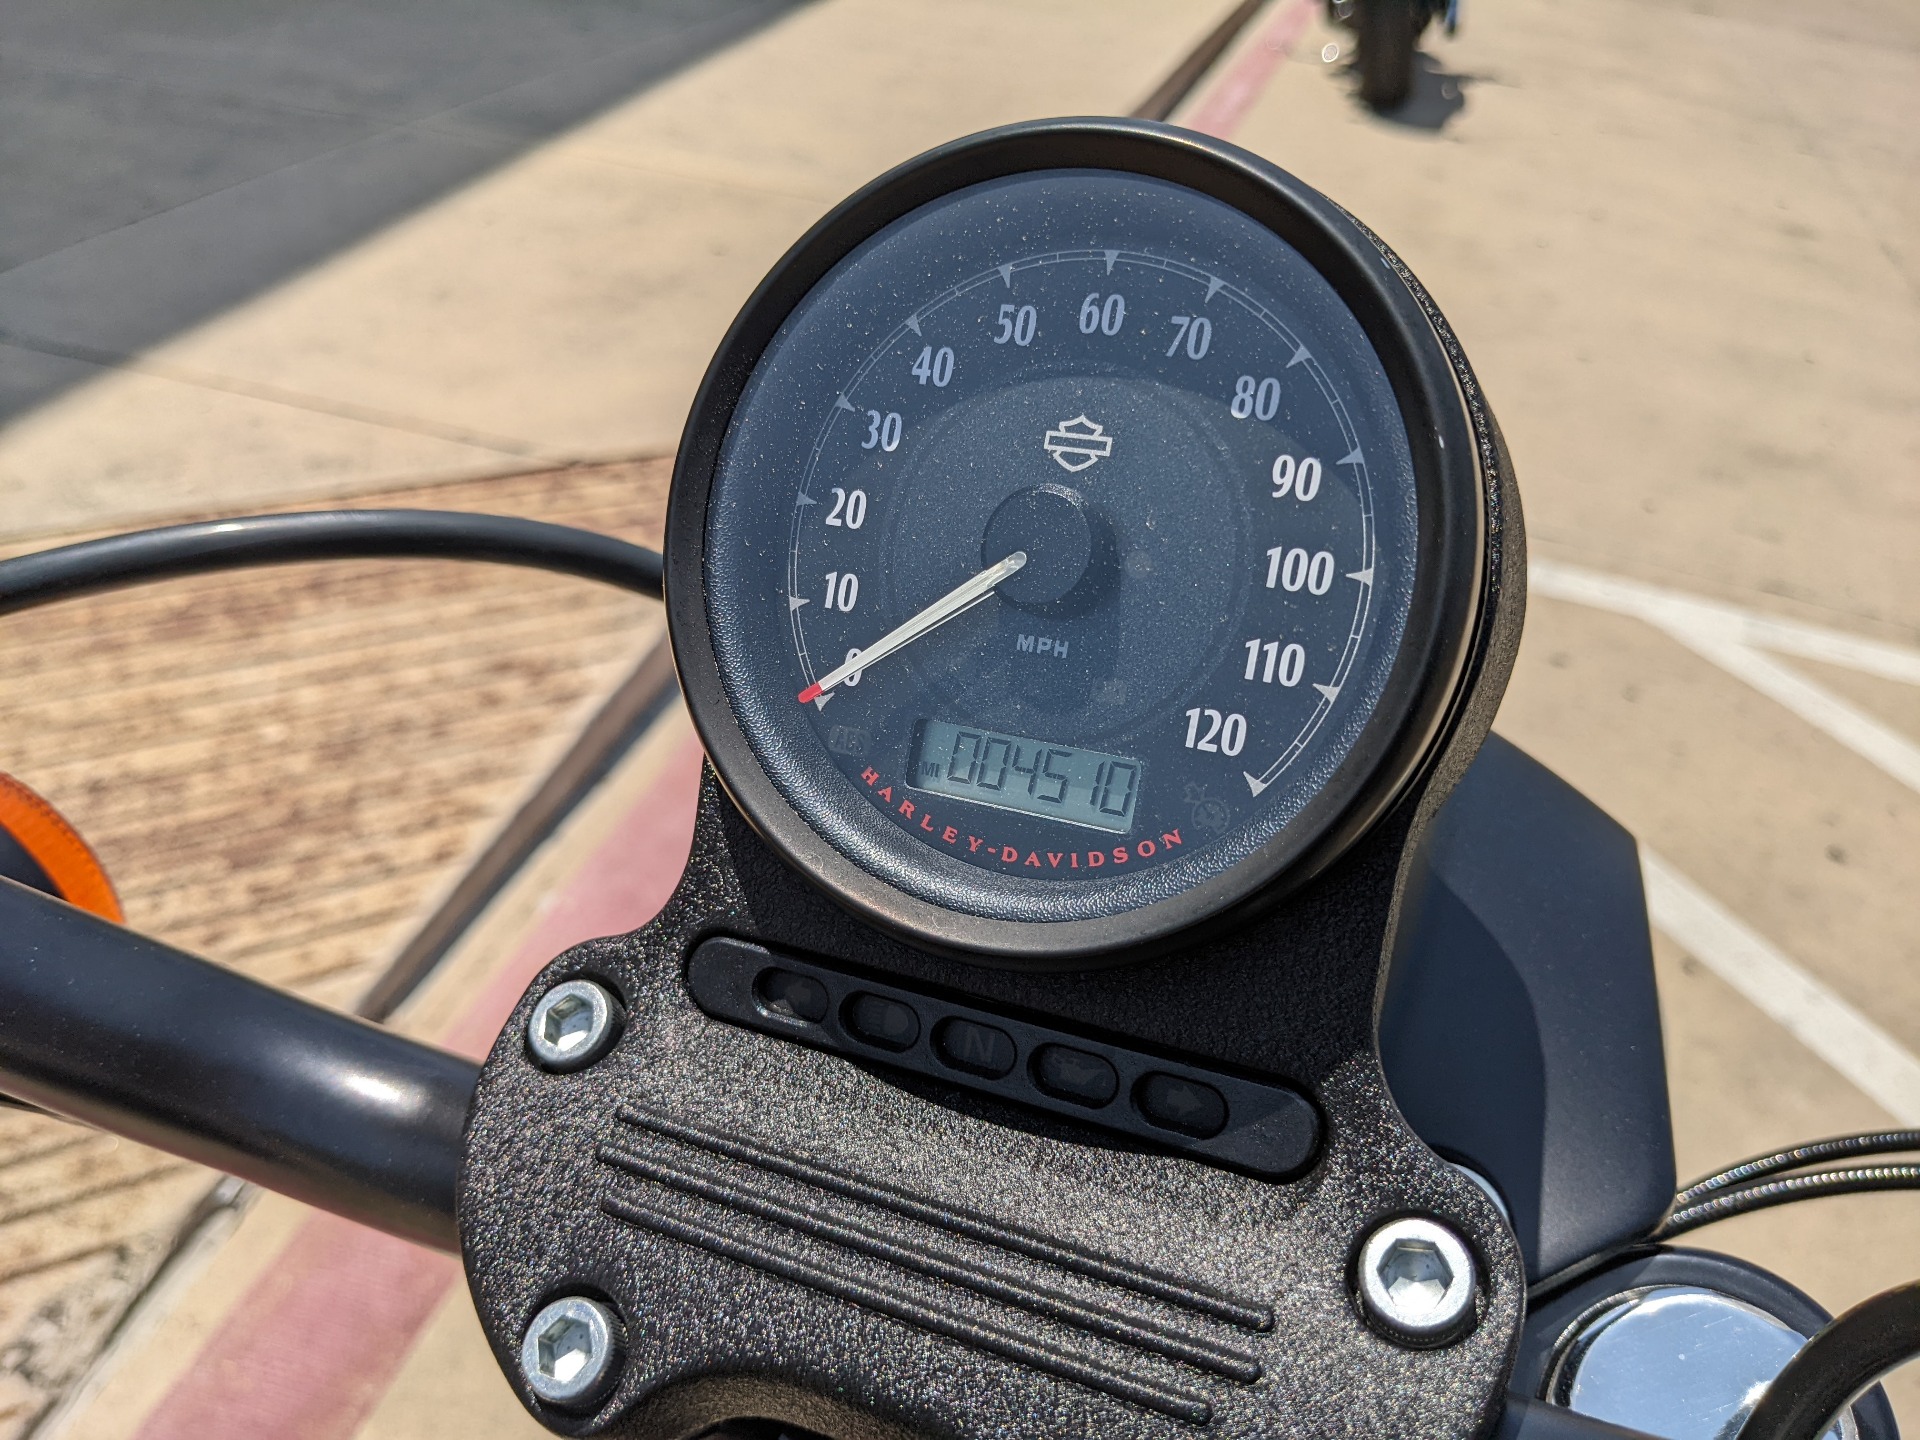 2020 Harley-Davidson Iron 883™ in San Antonio, Texas - Photo 11